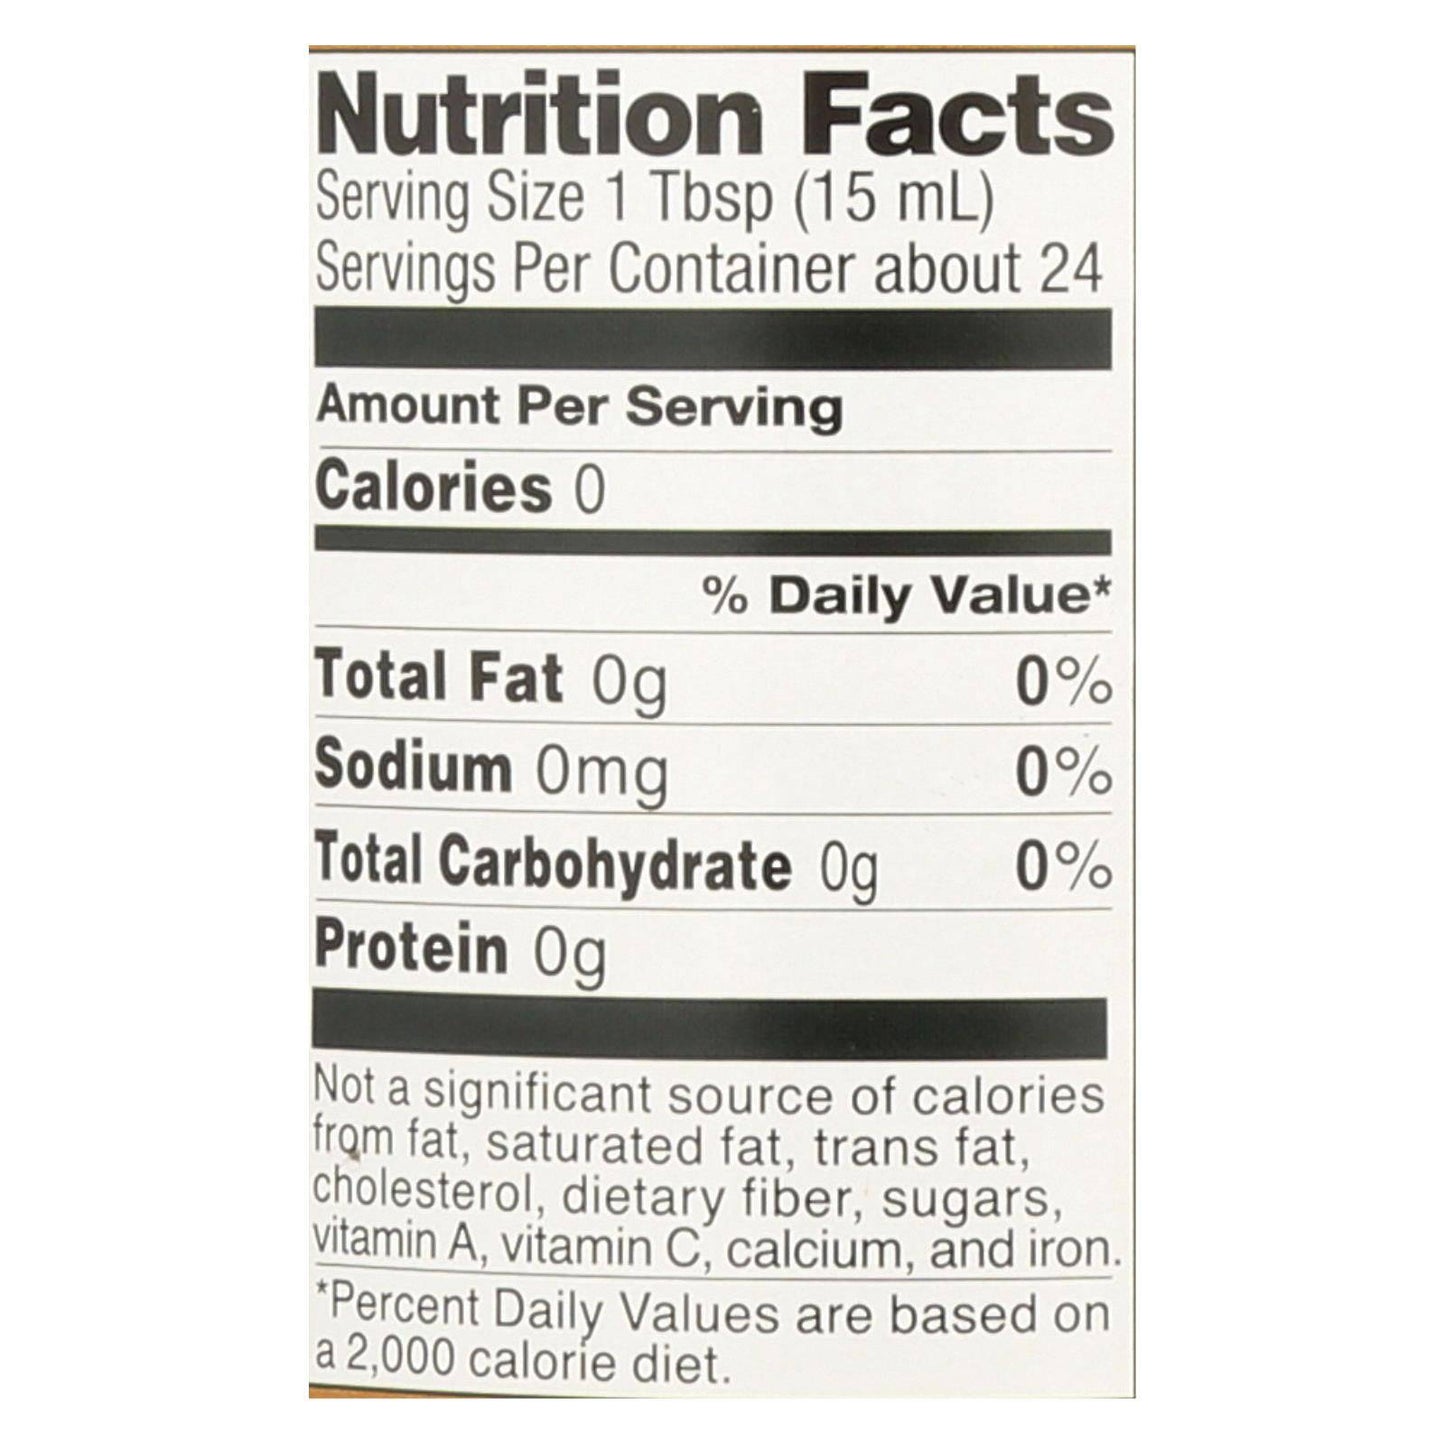 Buy Marukan Organic Rice Vinegar - Case Of 6 - 12 Fl Oz.  at OnlyNaturals.us